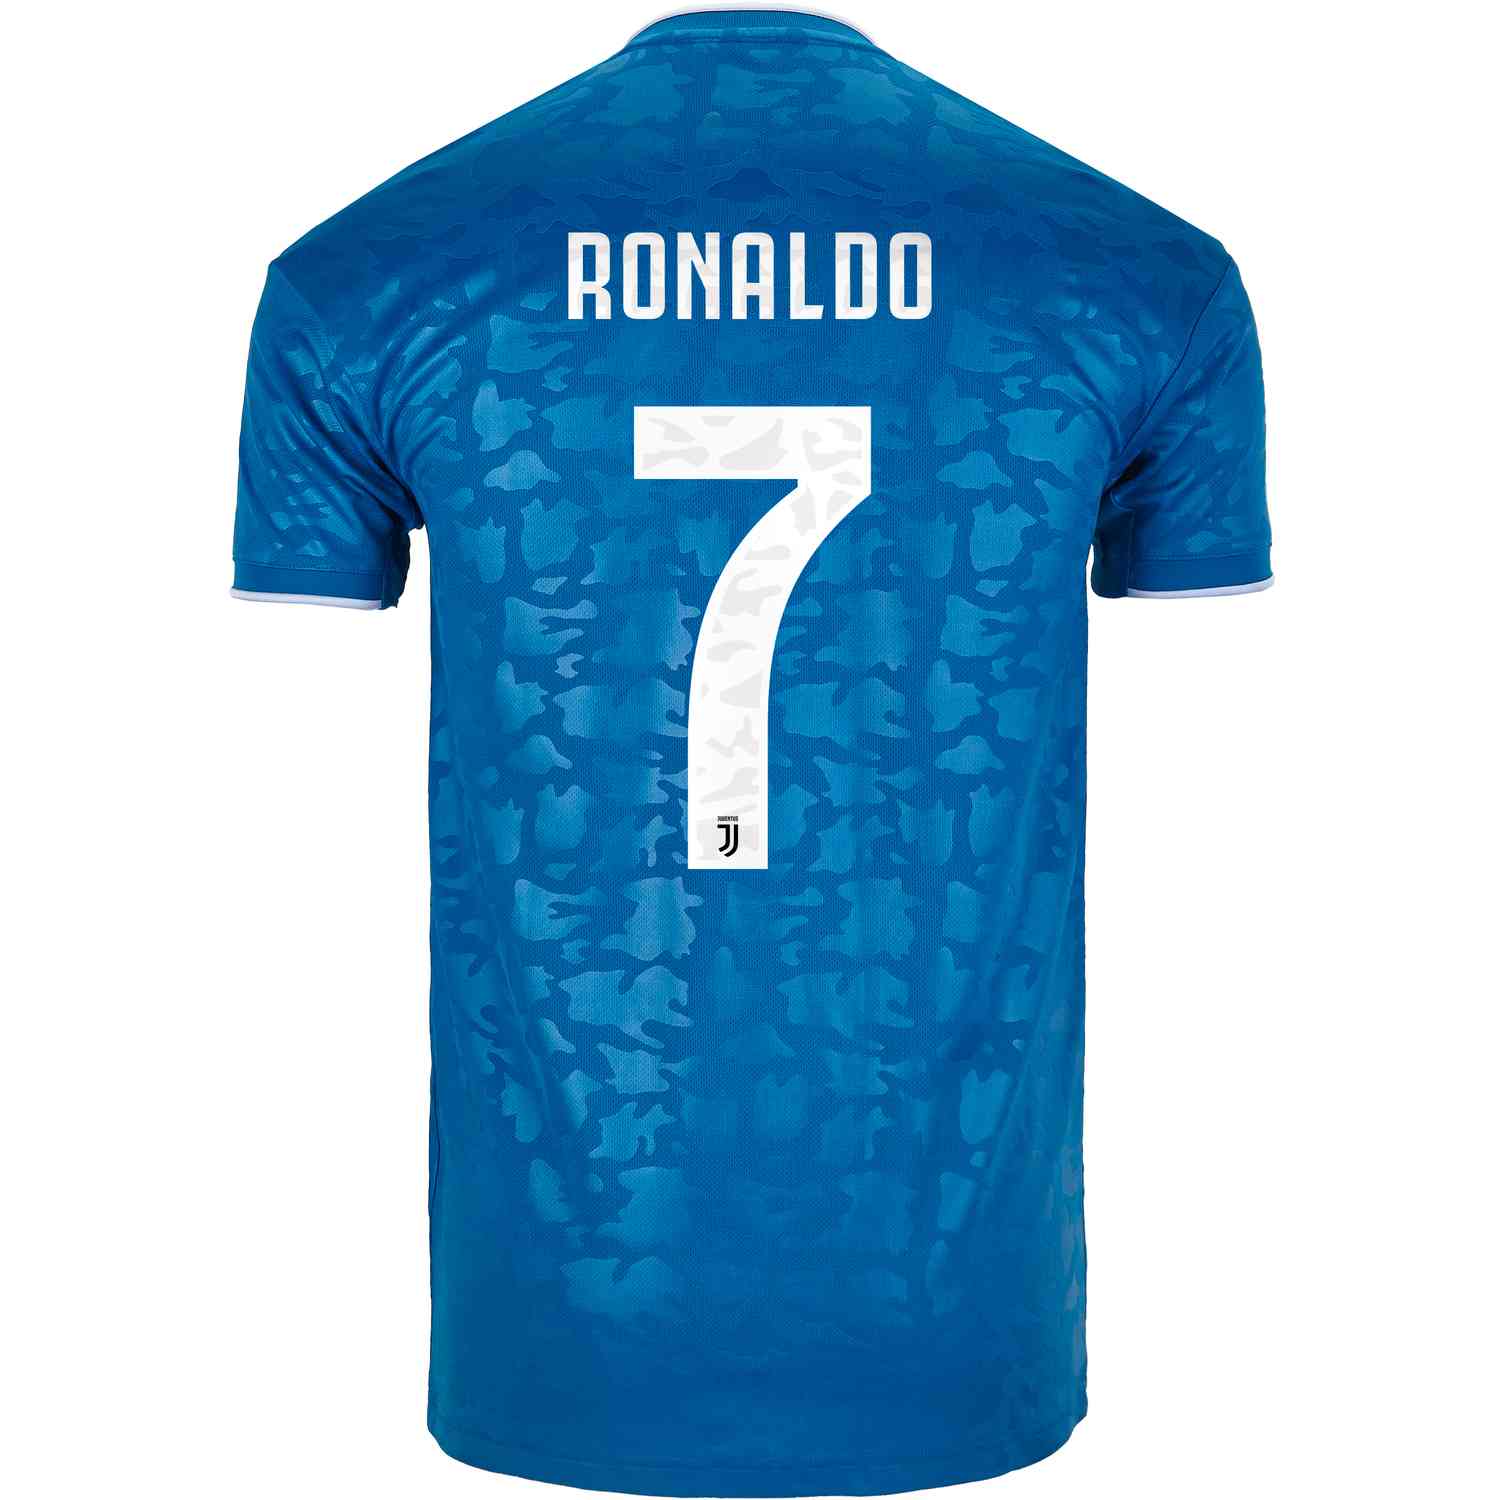 cheap ronaldo jersey